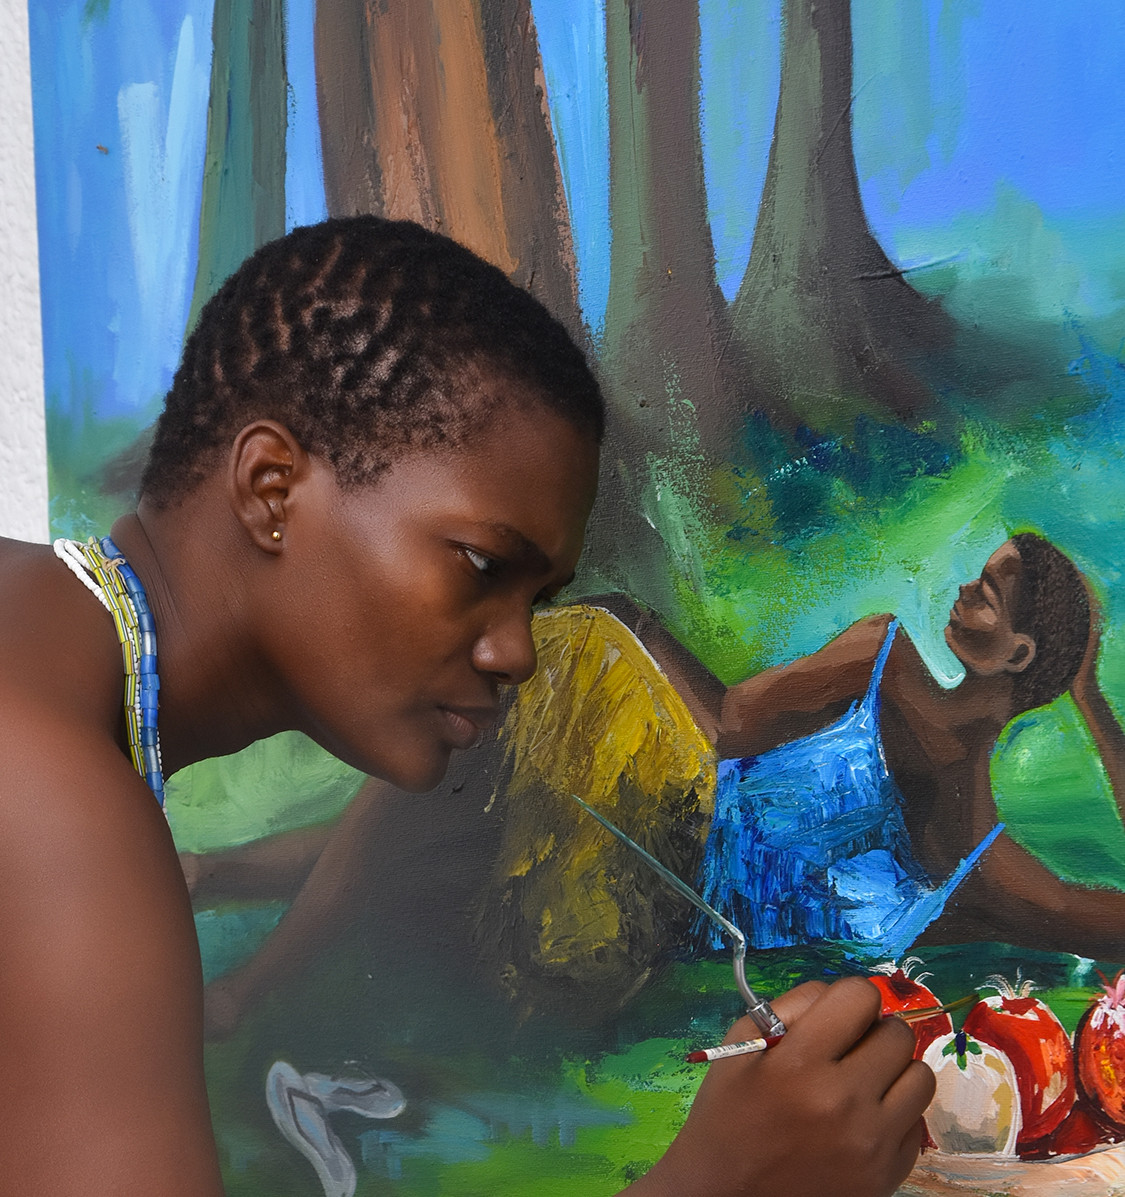 Astounding Ghanaian Painter/Musician "Nyornuwofia Agorsor" shares some stunning photos from her art studio AdvertAfrica News on afronewswire.com: Amplifying Africa's Voice | afronewswire.com | Breaking News & Stories